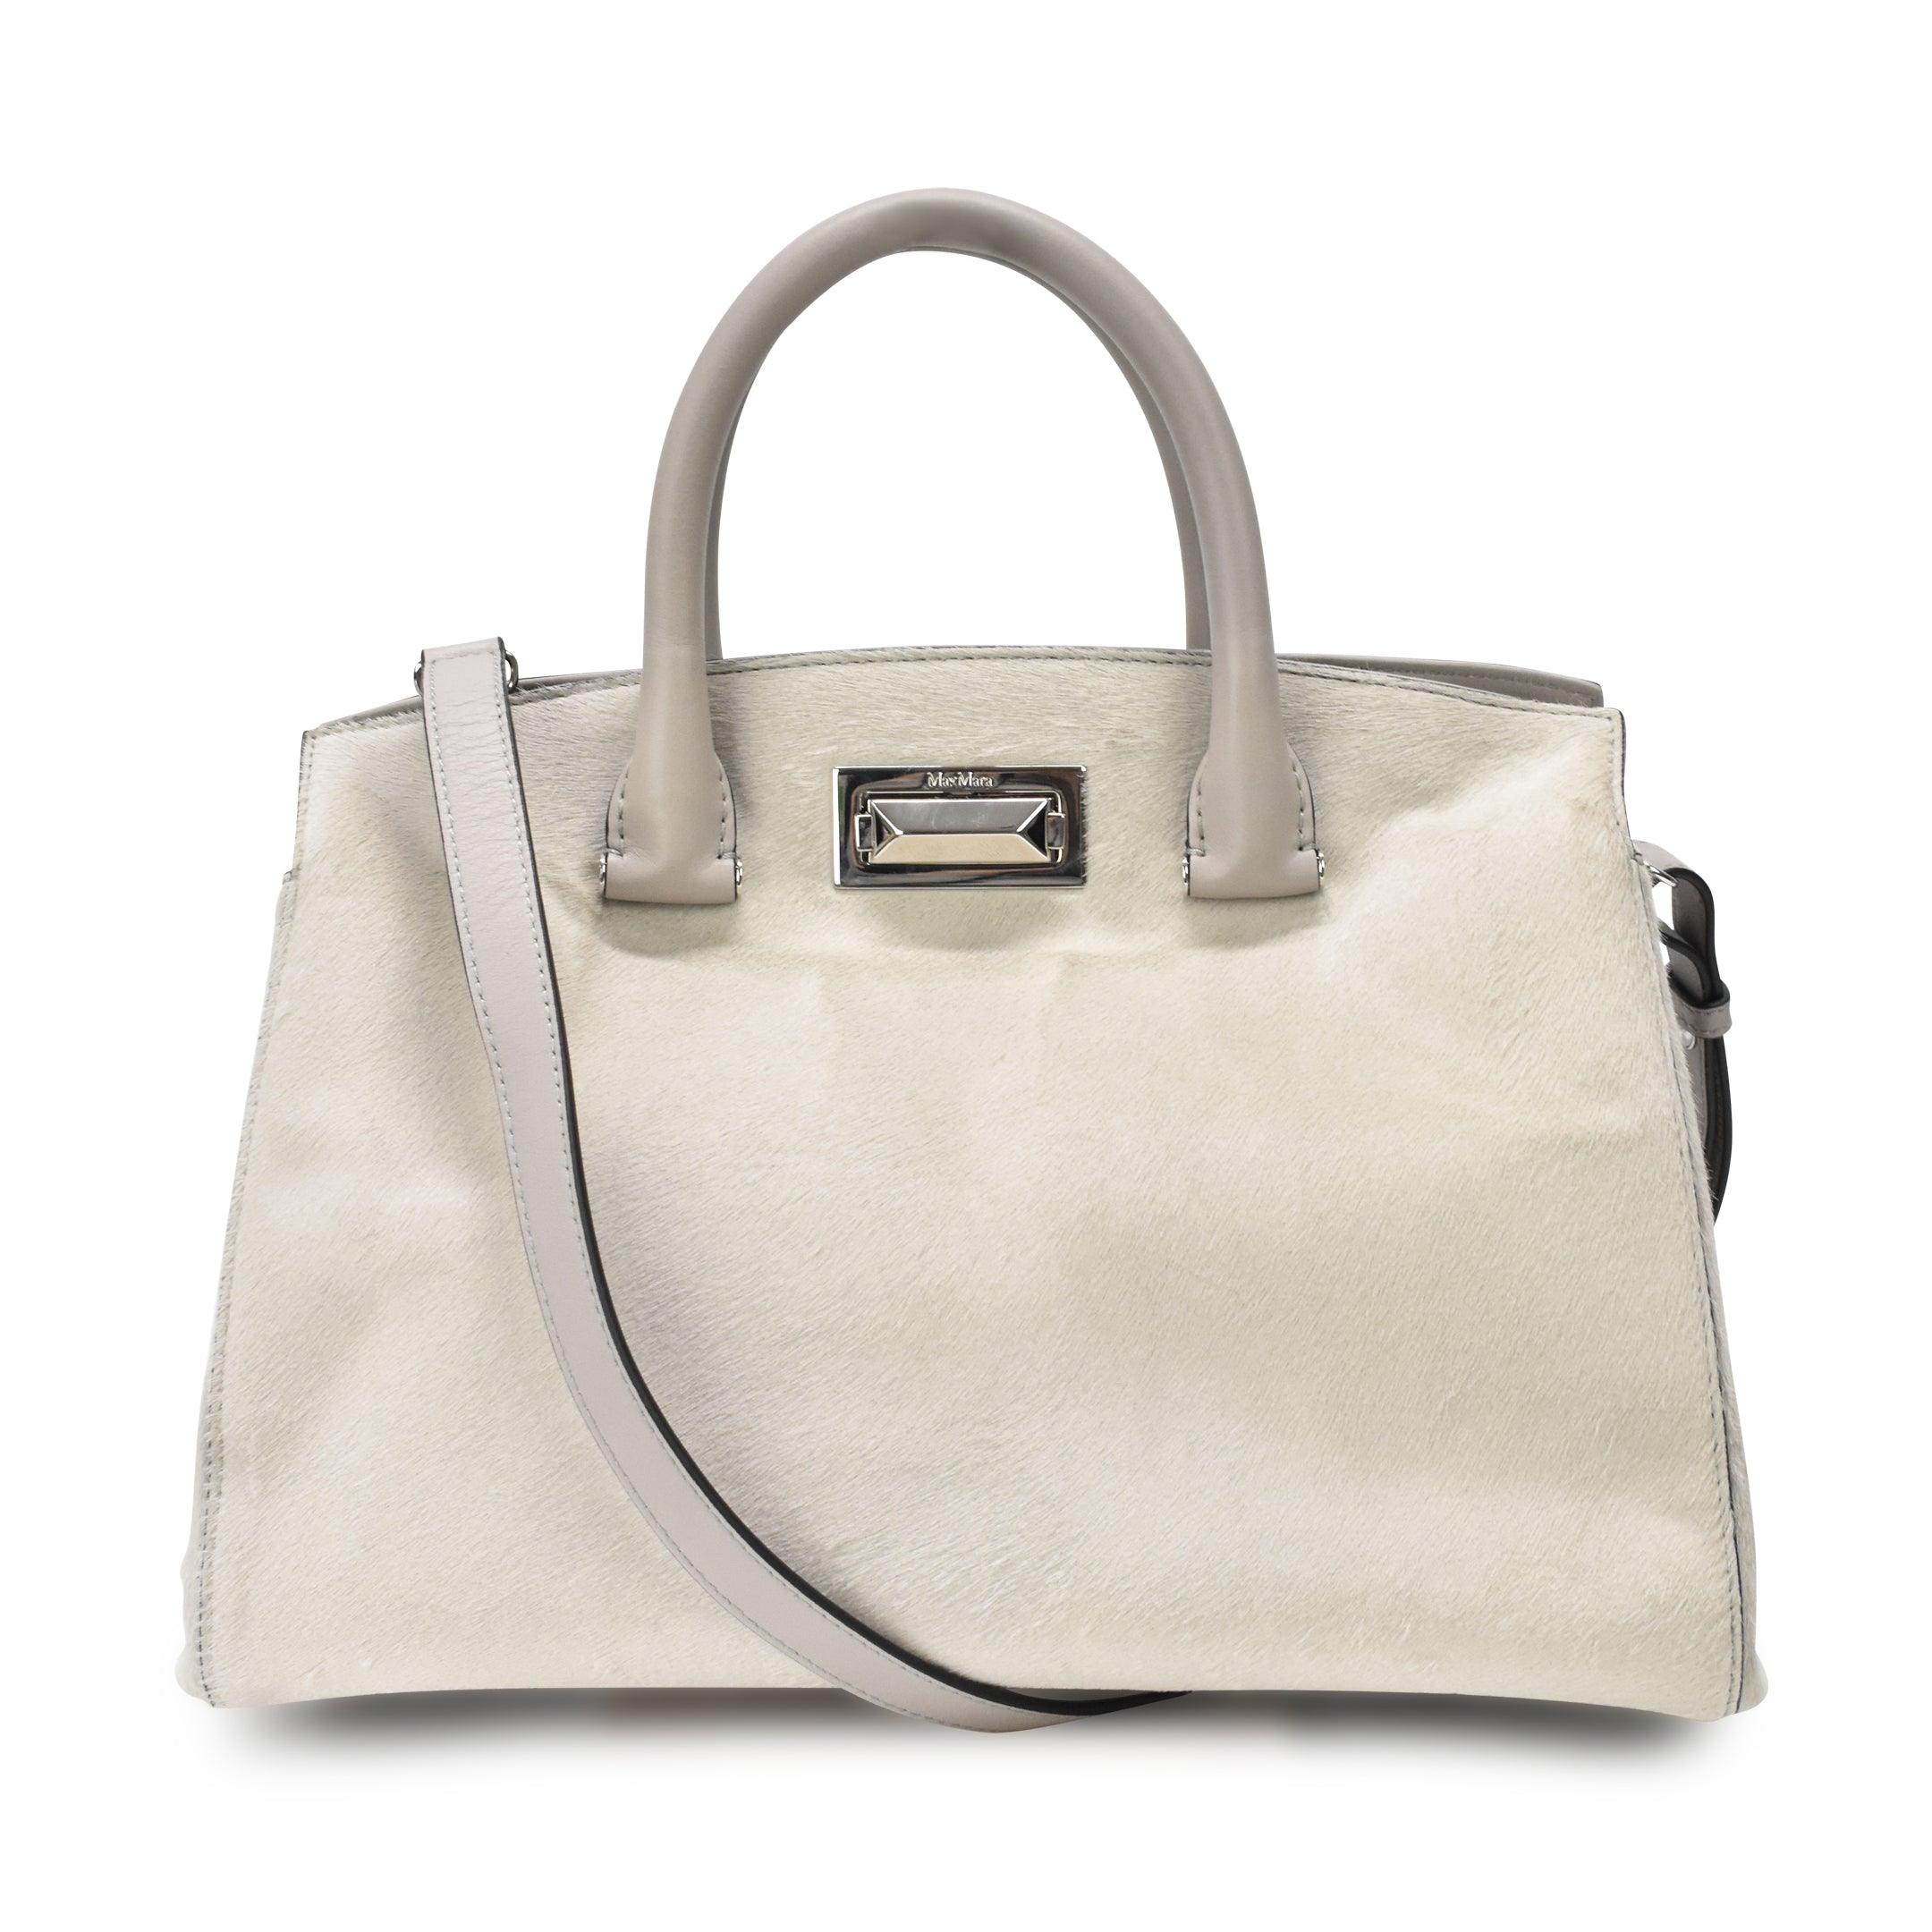 Max Mara Tote Bag - Fashionably Yours